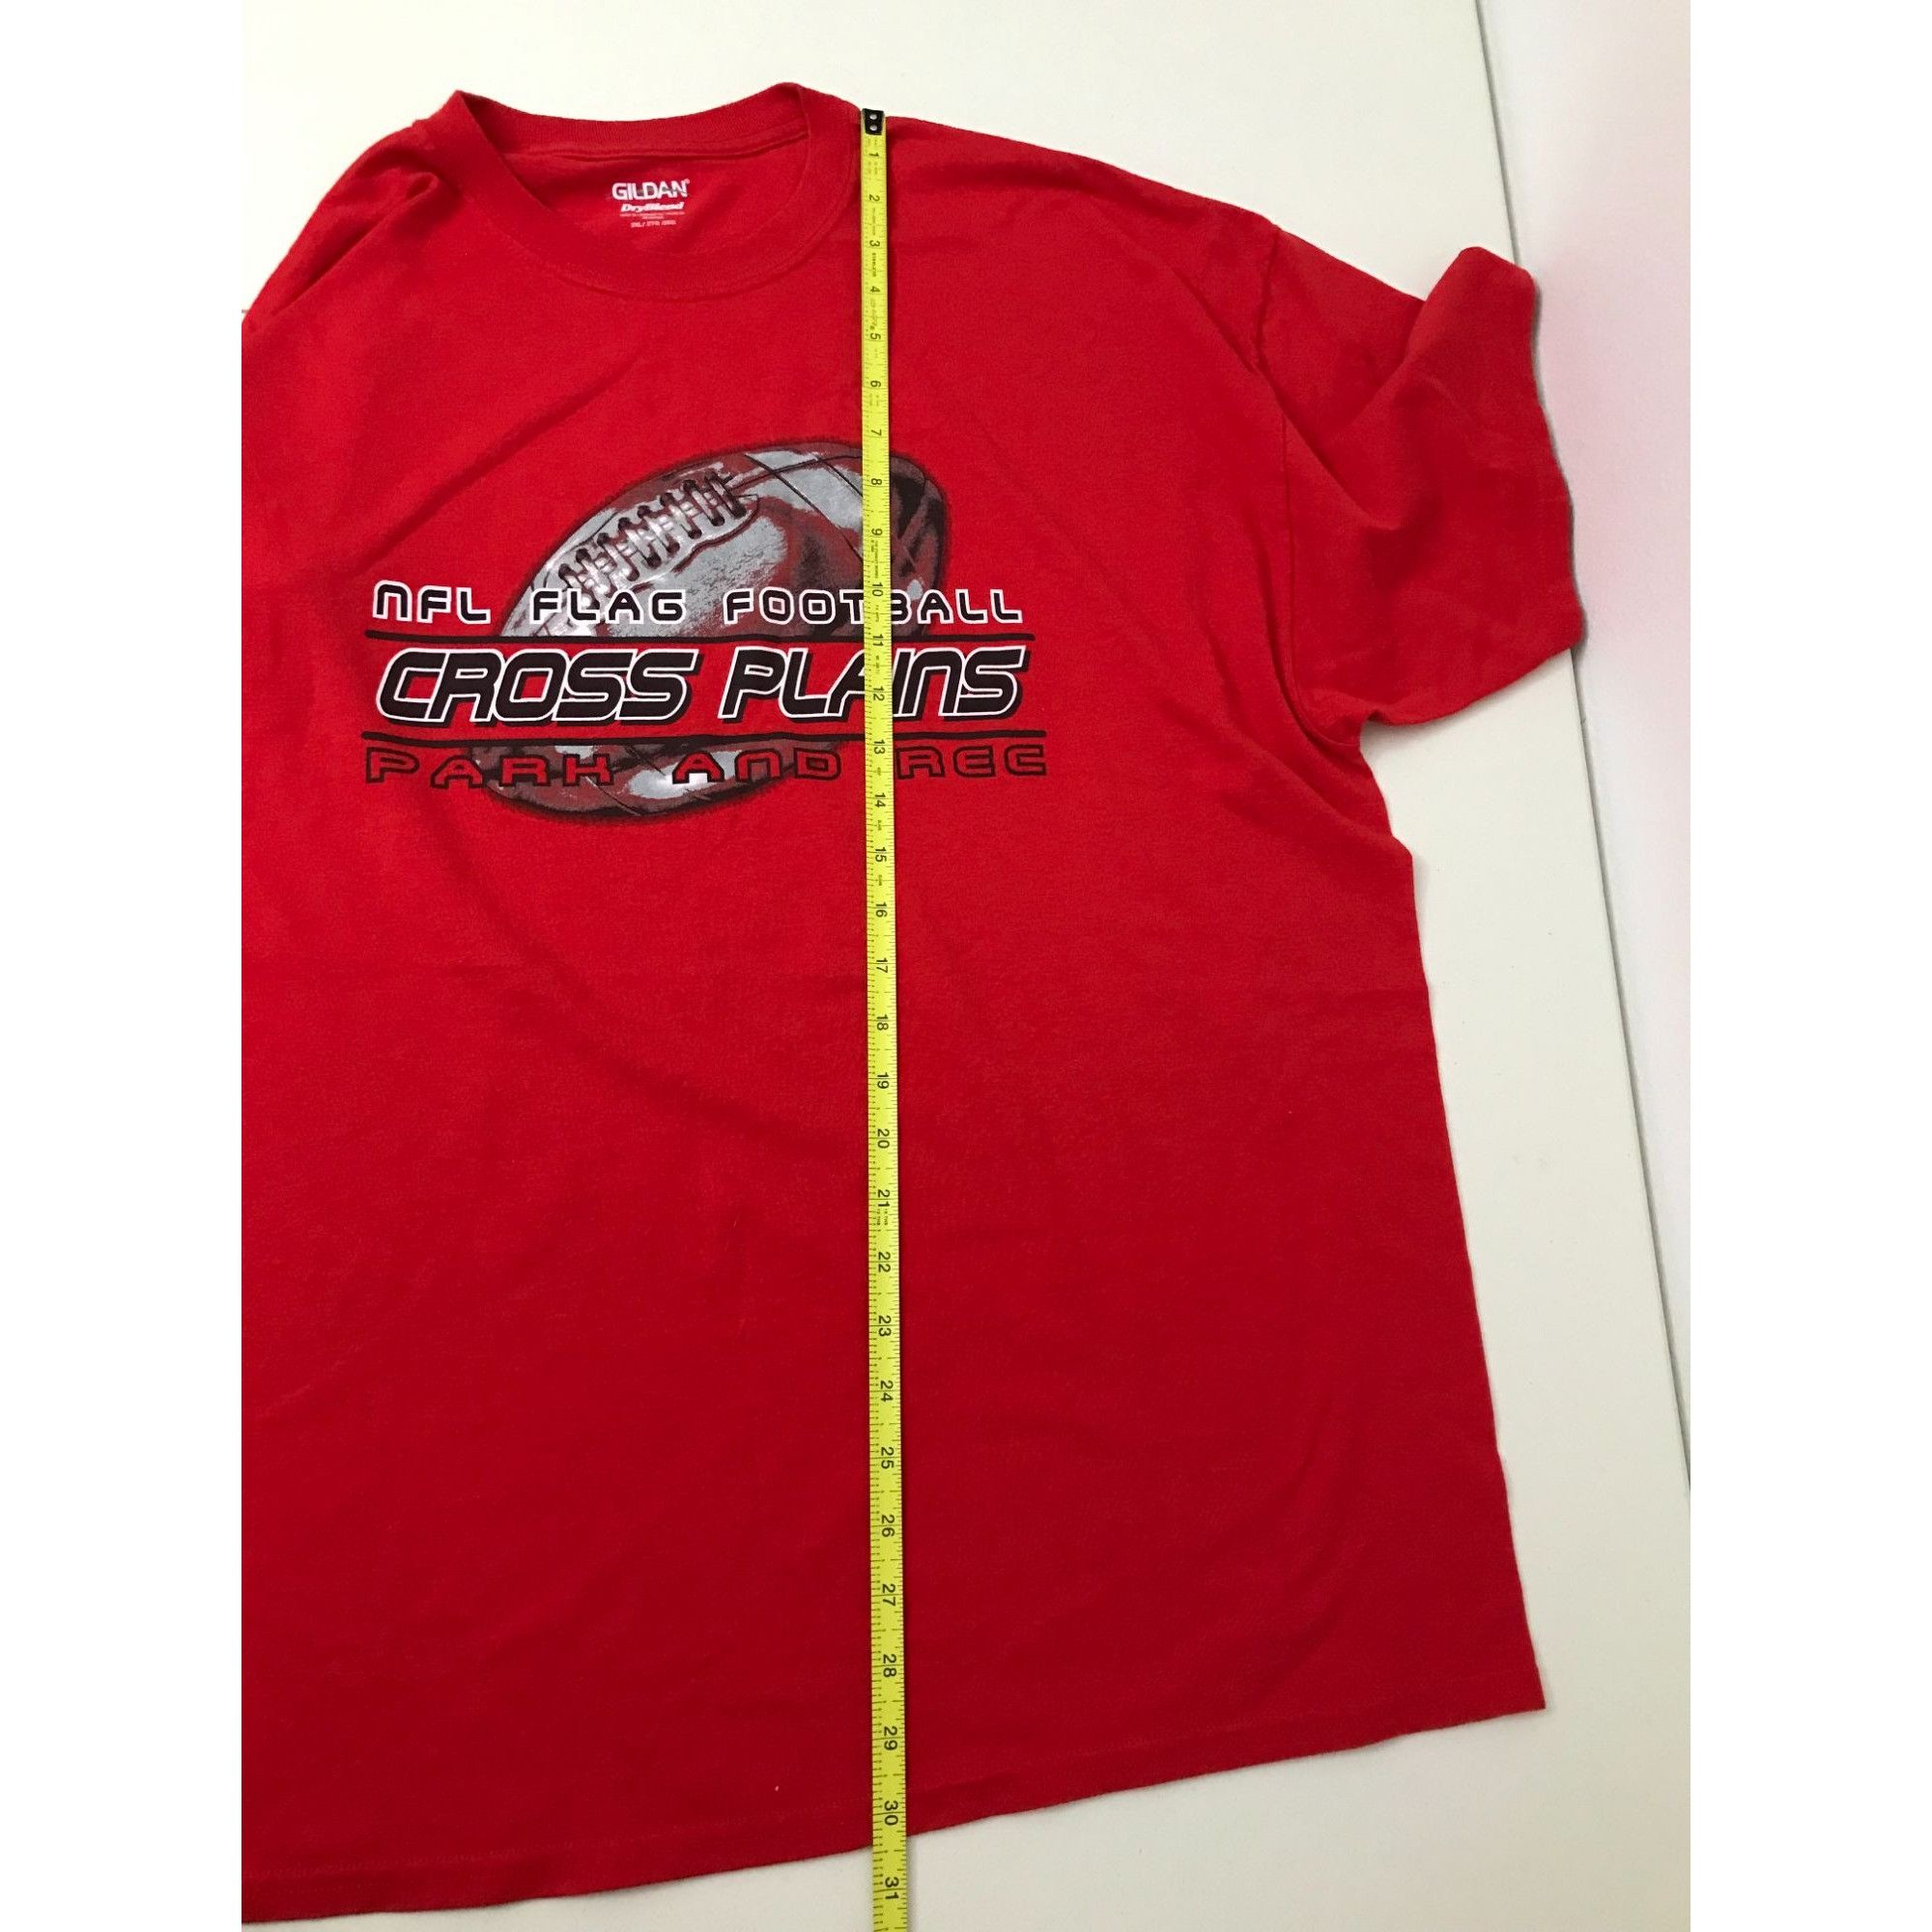 Gildan Gildan Dry Blend NFL Crossplains Mens XXL Red T Shirt *13 Size US XXL / EU 58 / 5 - 3 Thumbnail